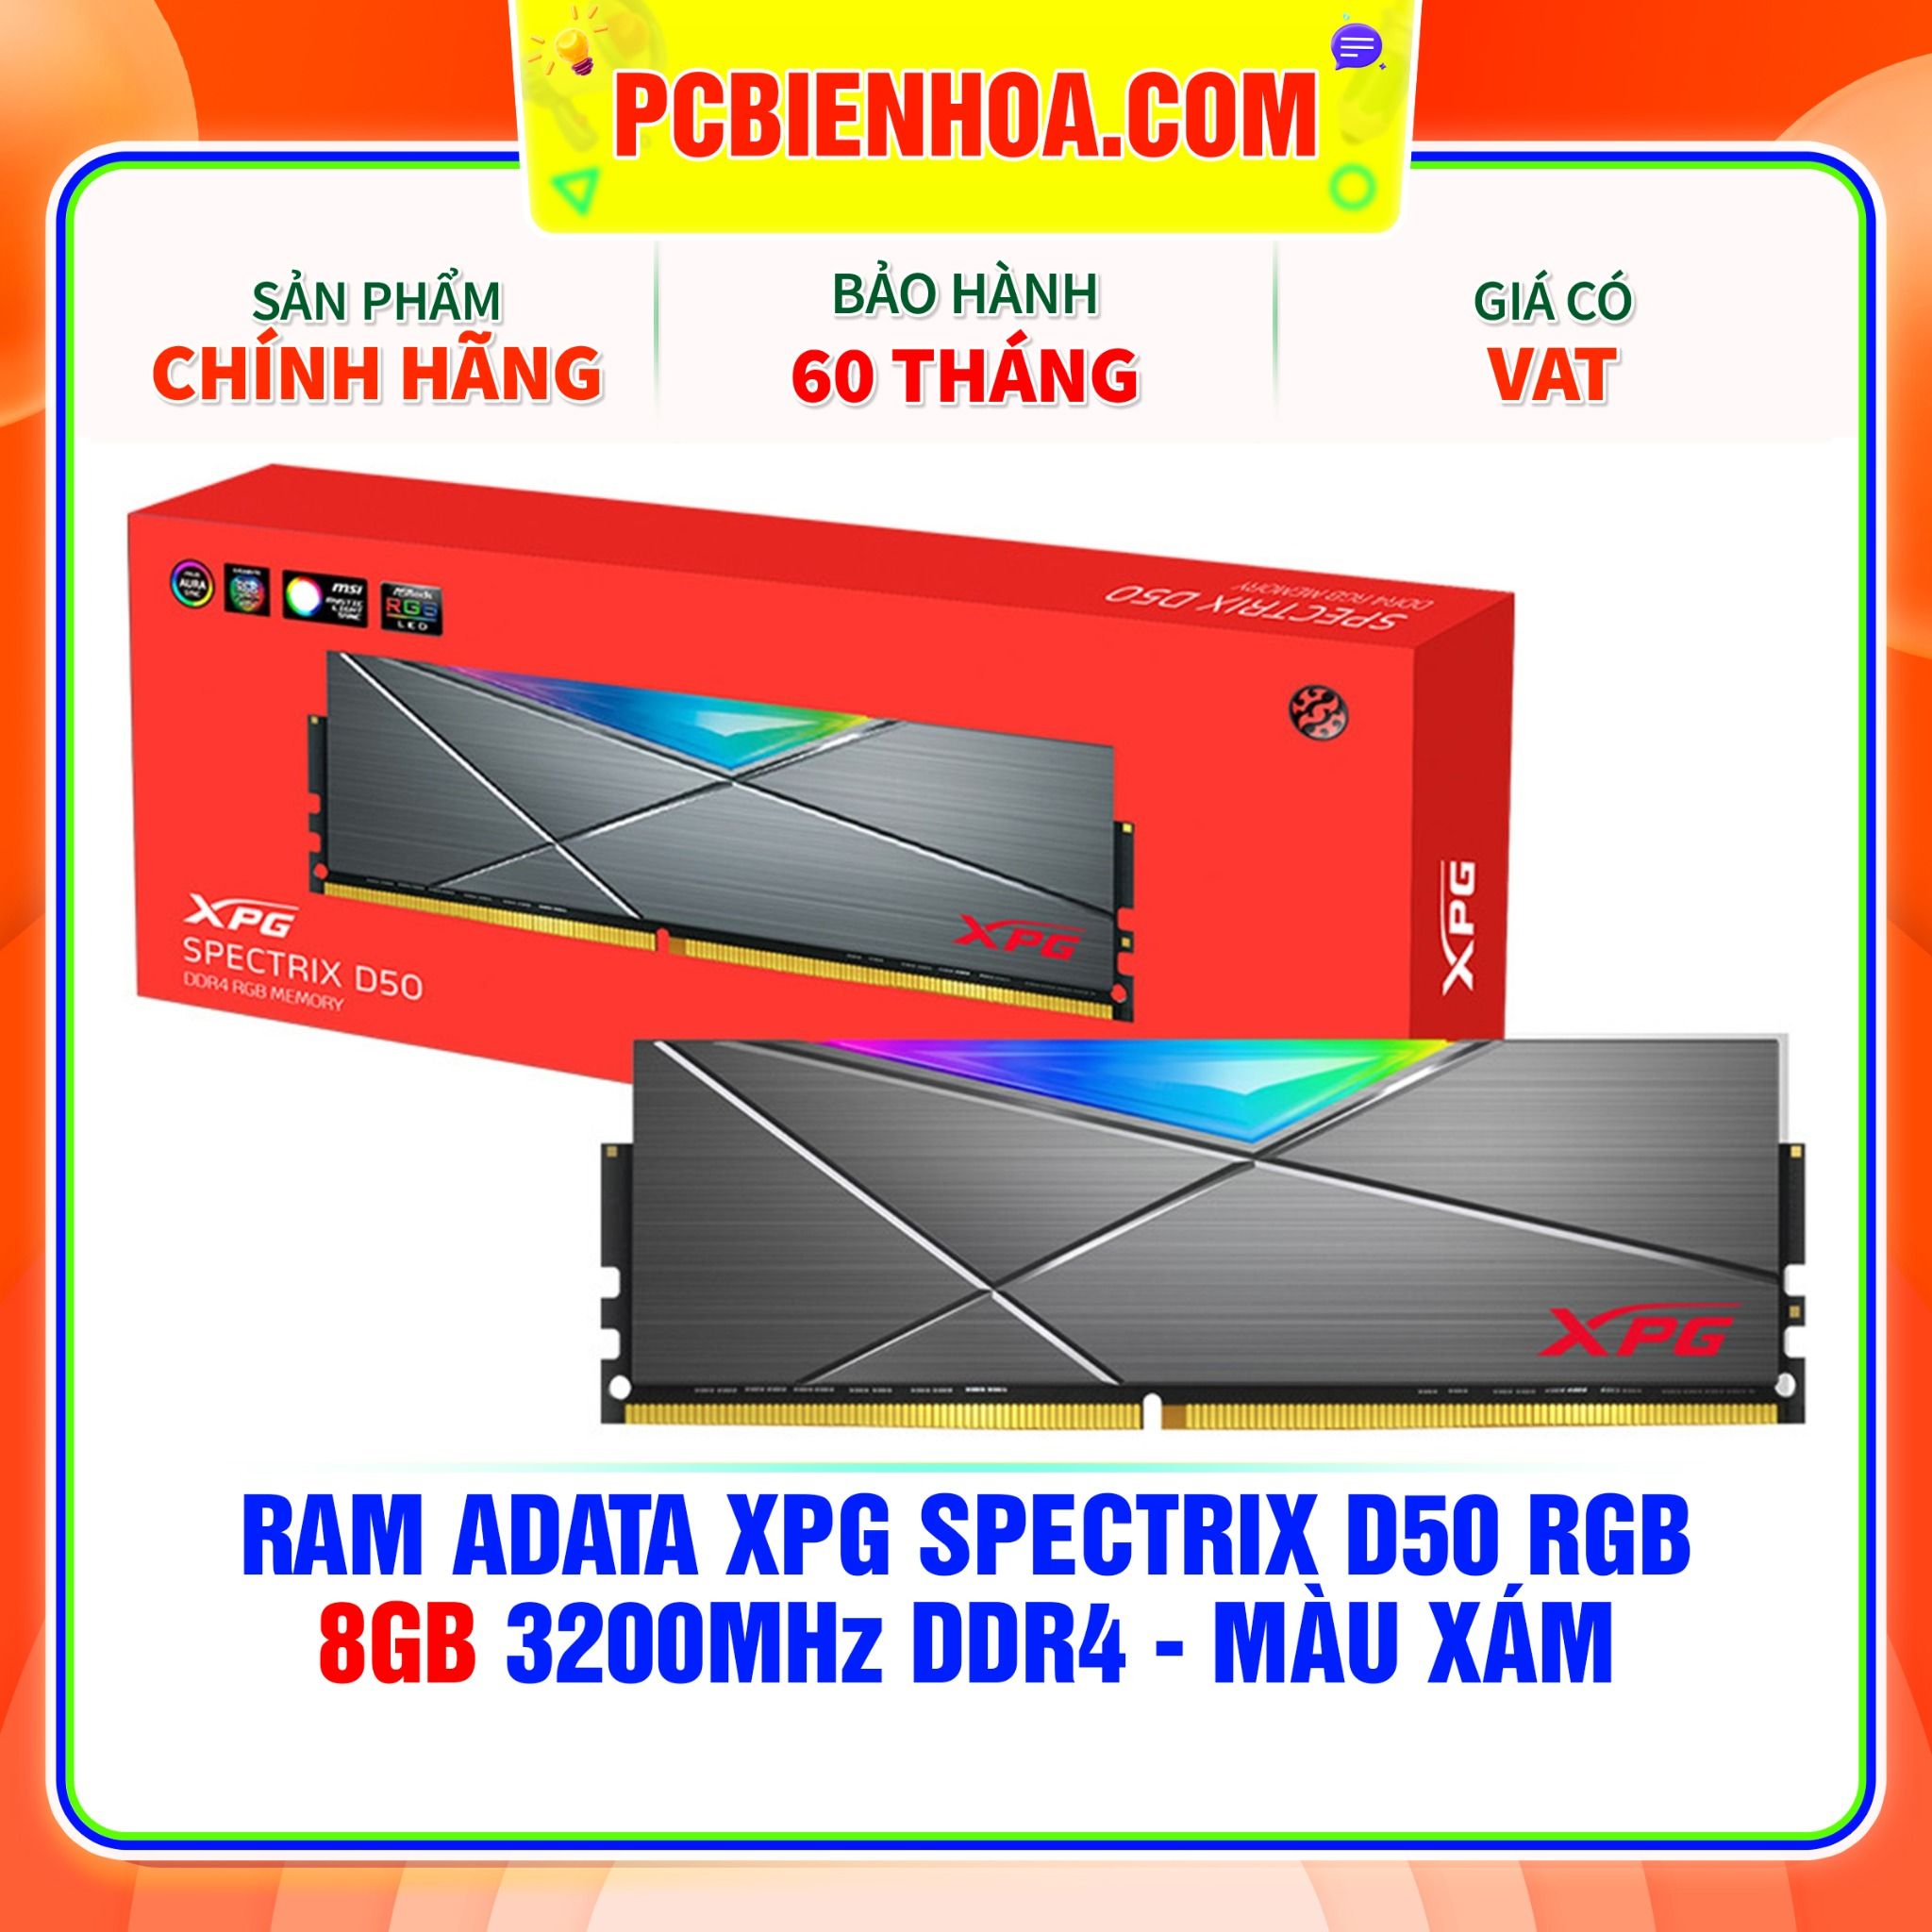  RAM ADATA XPG SPECTRIX D50 RGB - 8GB 3200MHz DDR4 - MÀU XÁM 